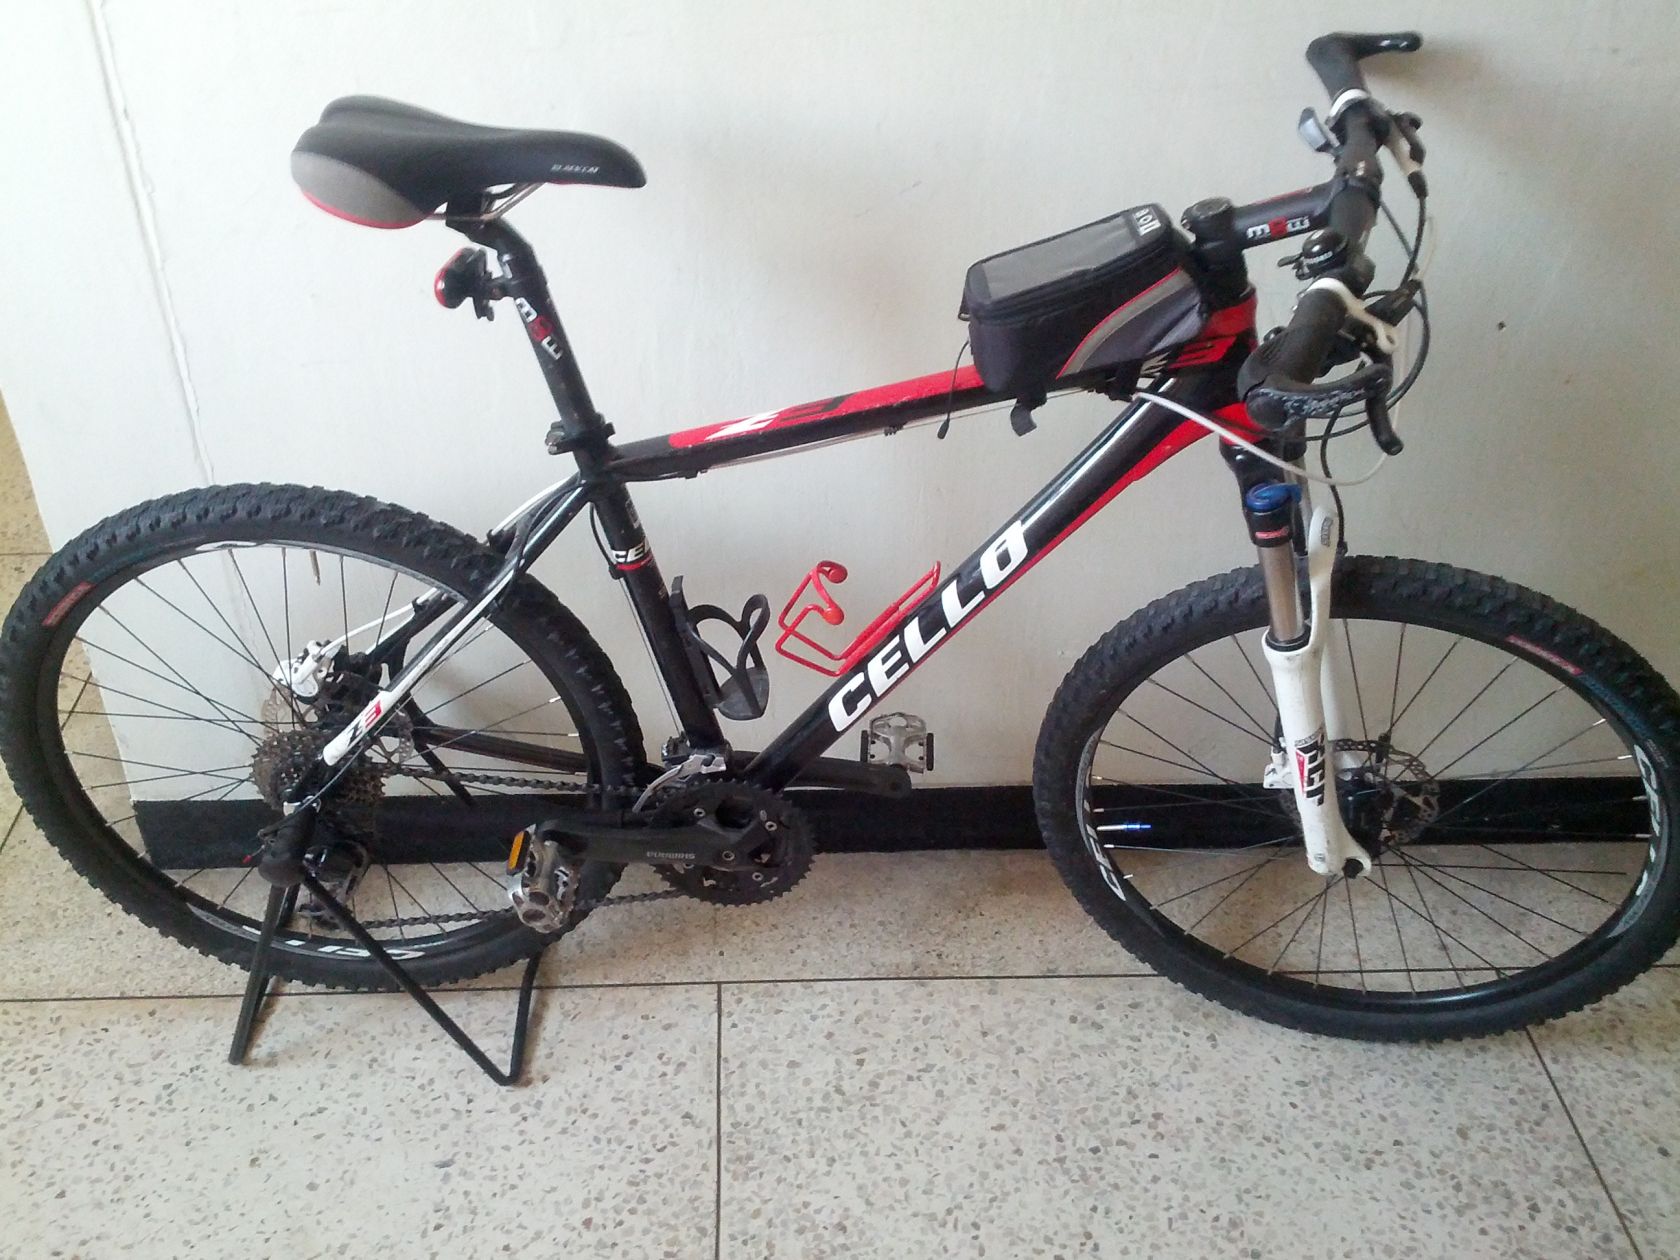 2014-05-30 18.50.59.jpg : 입문 MTB 자전거 첼로 Z3 판매합니다.